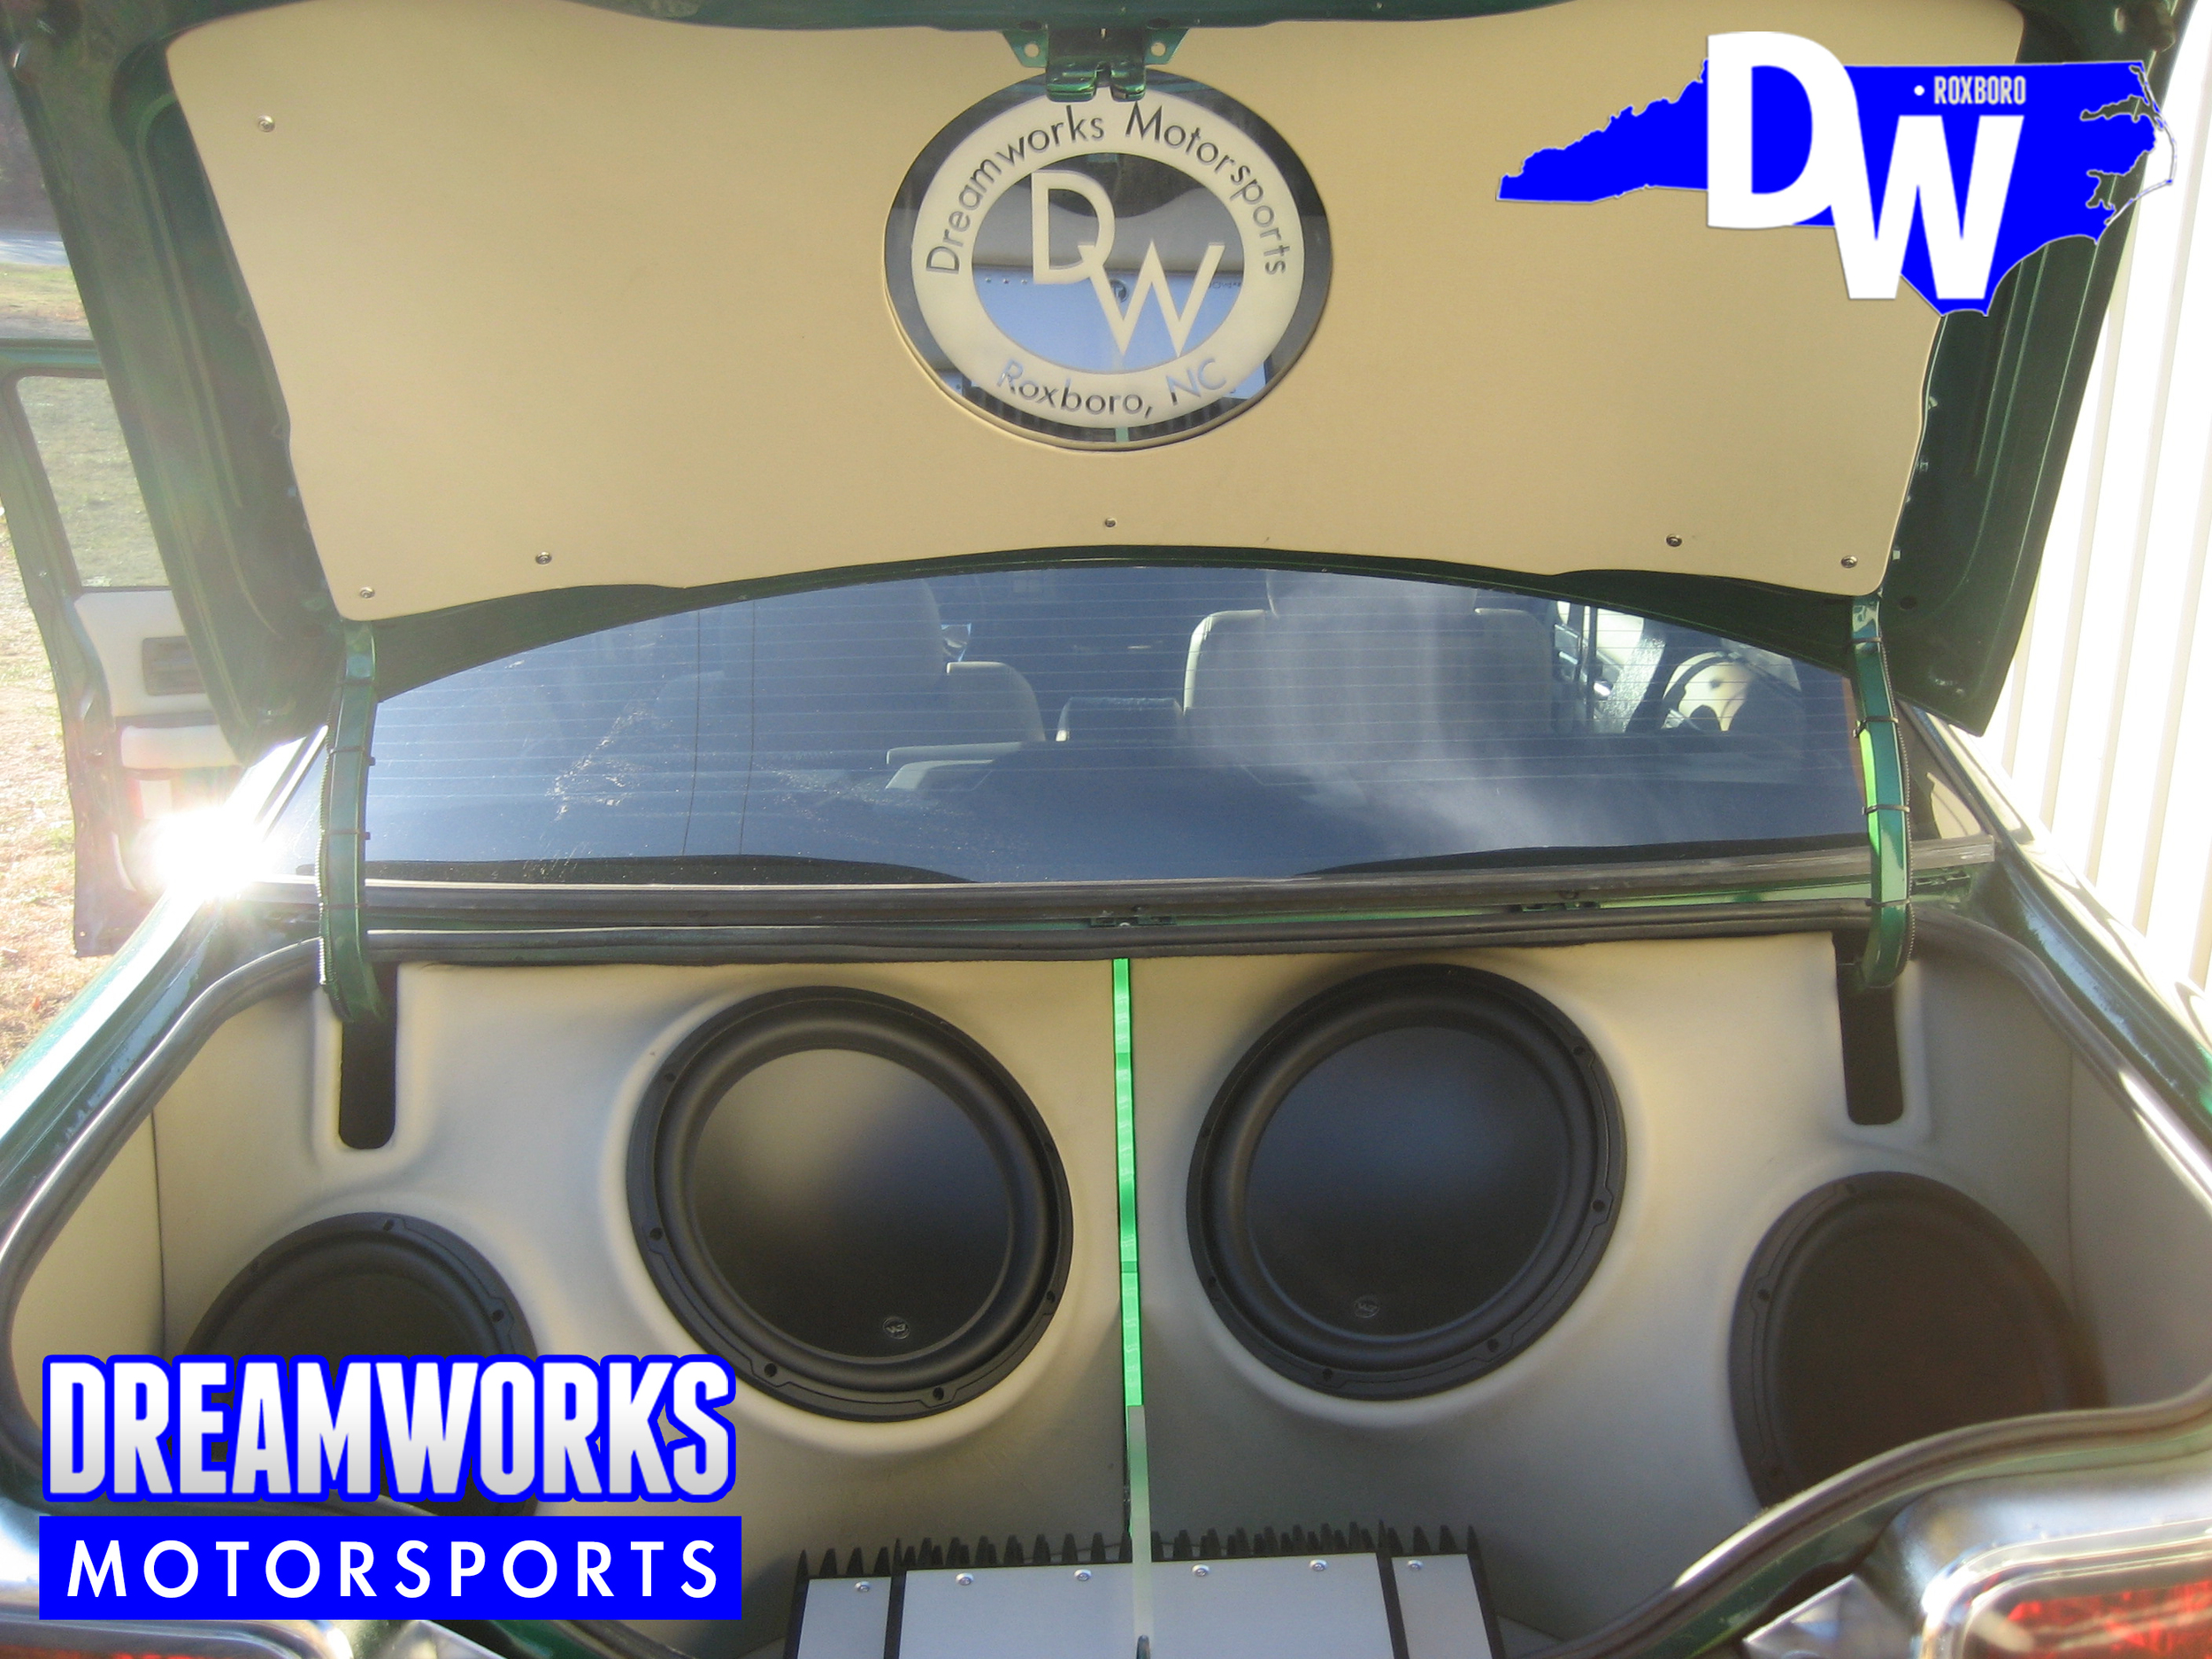 91-Chevrolet-Caprice-Dreamworks-Motorsports-6.jpg